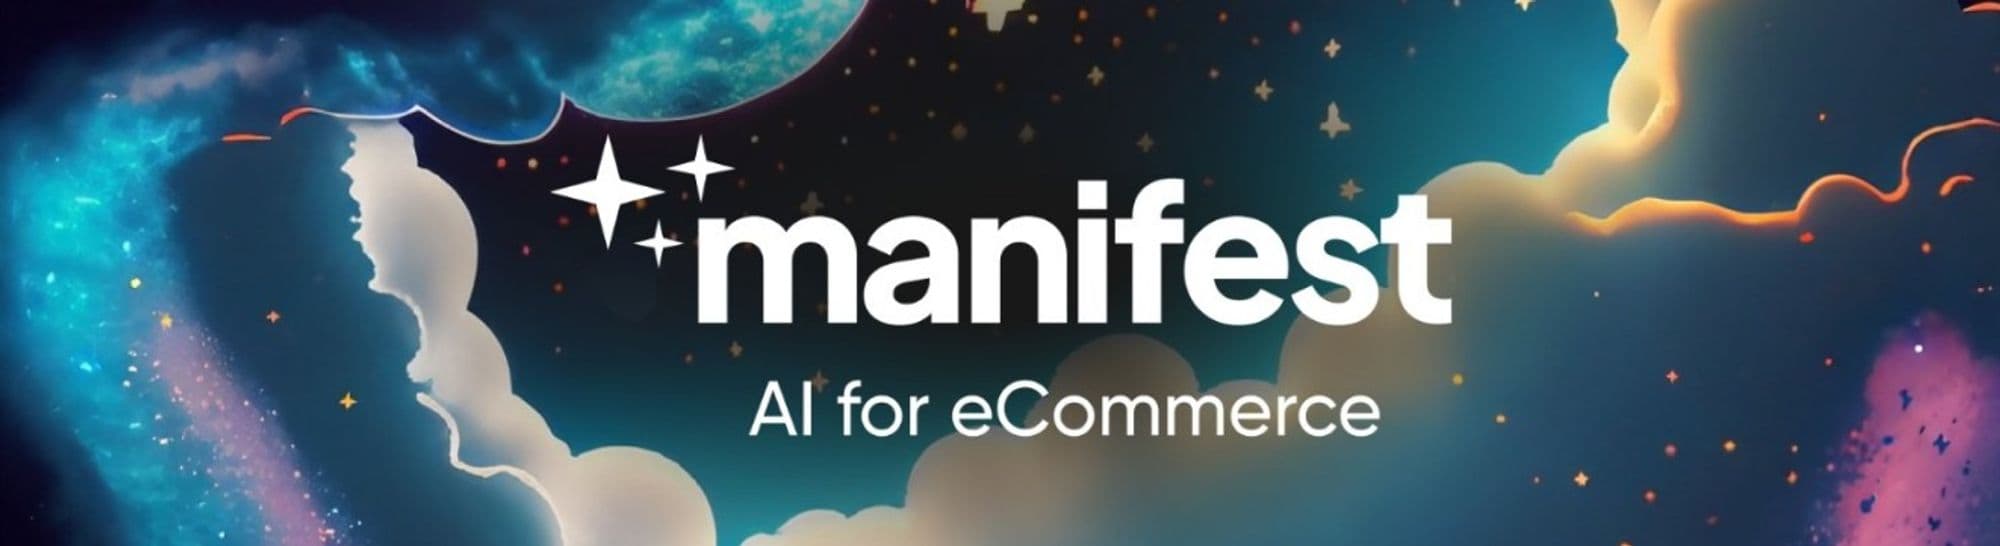 Manifest AI Cover Image